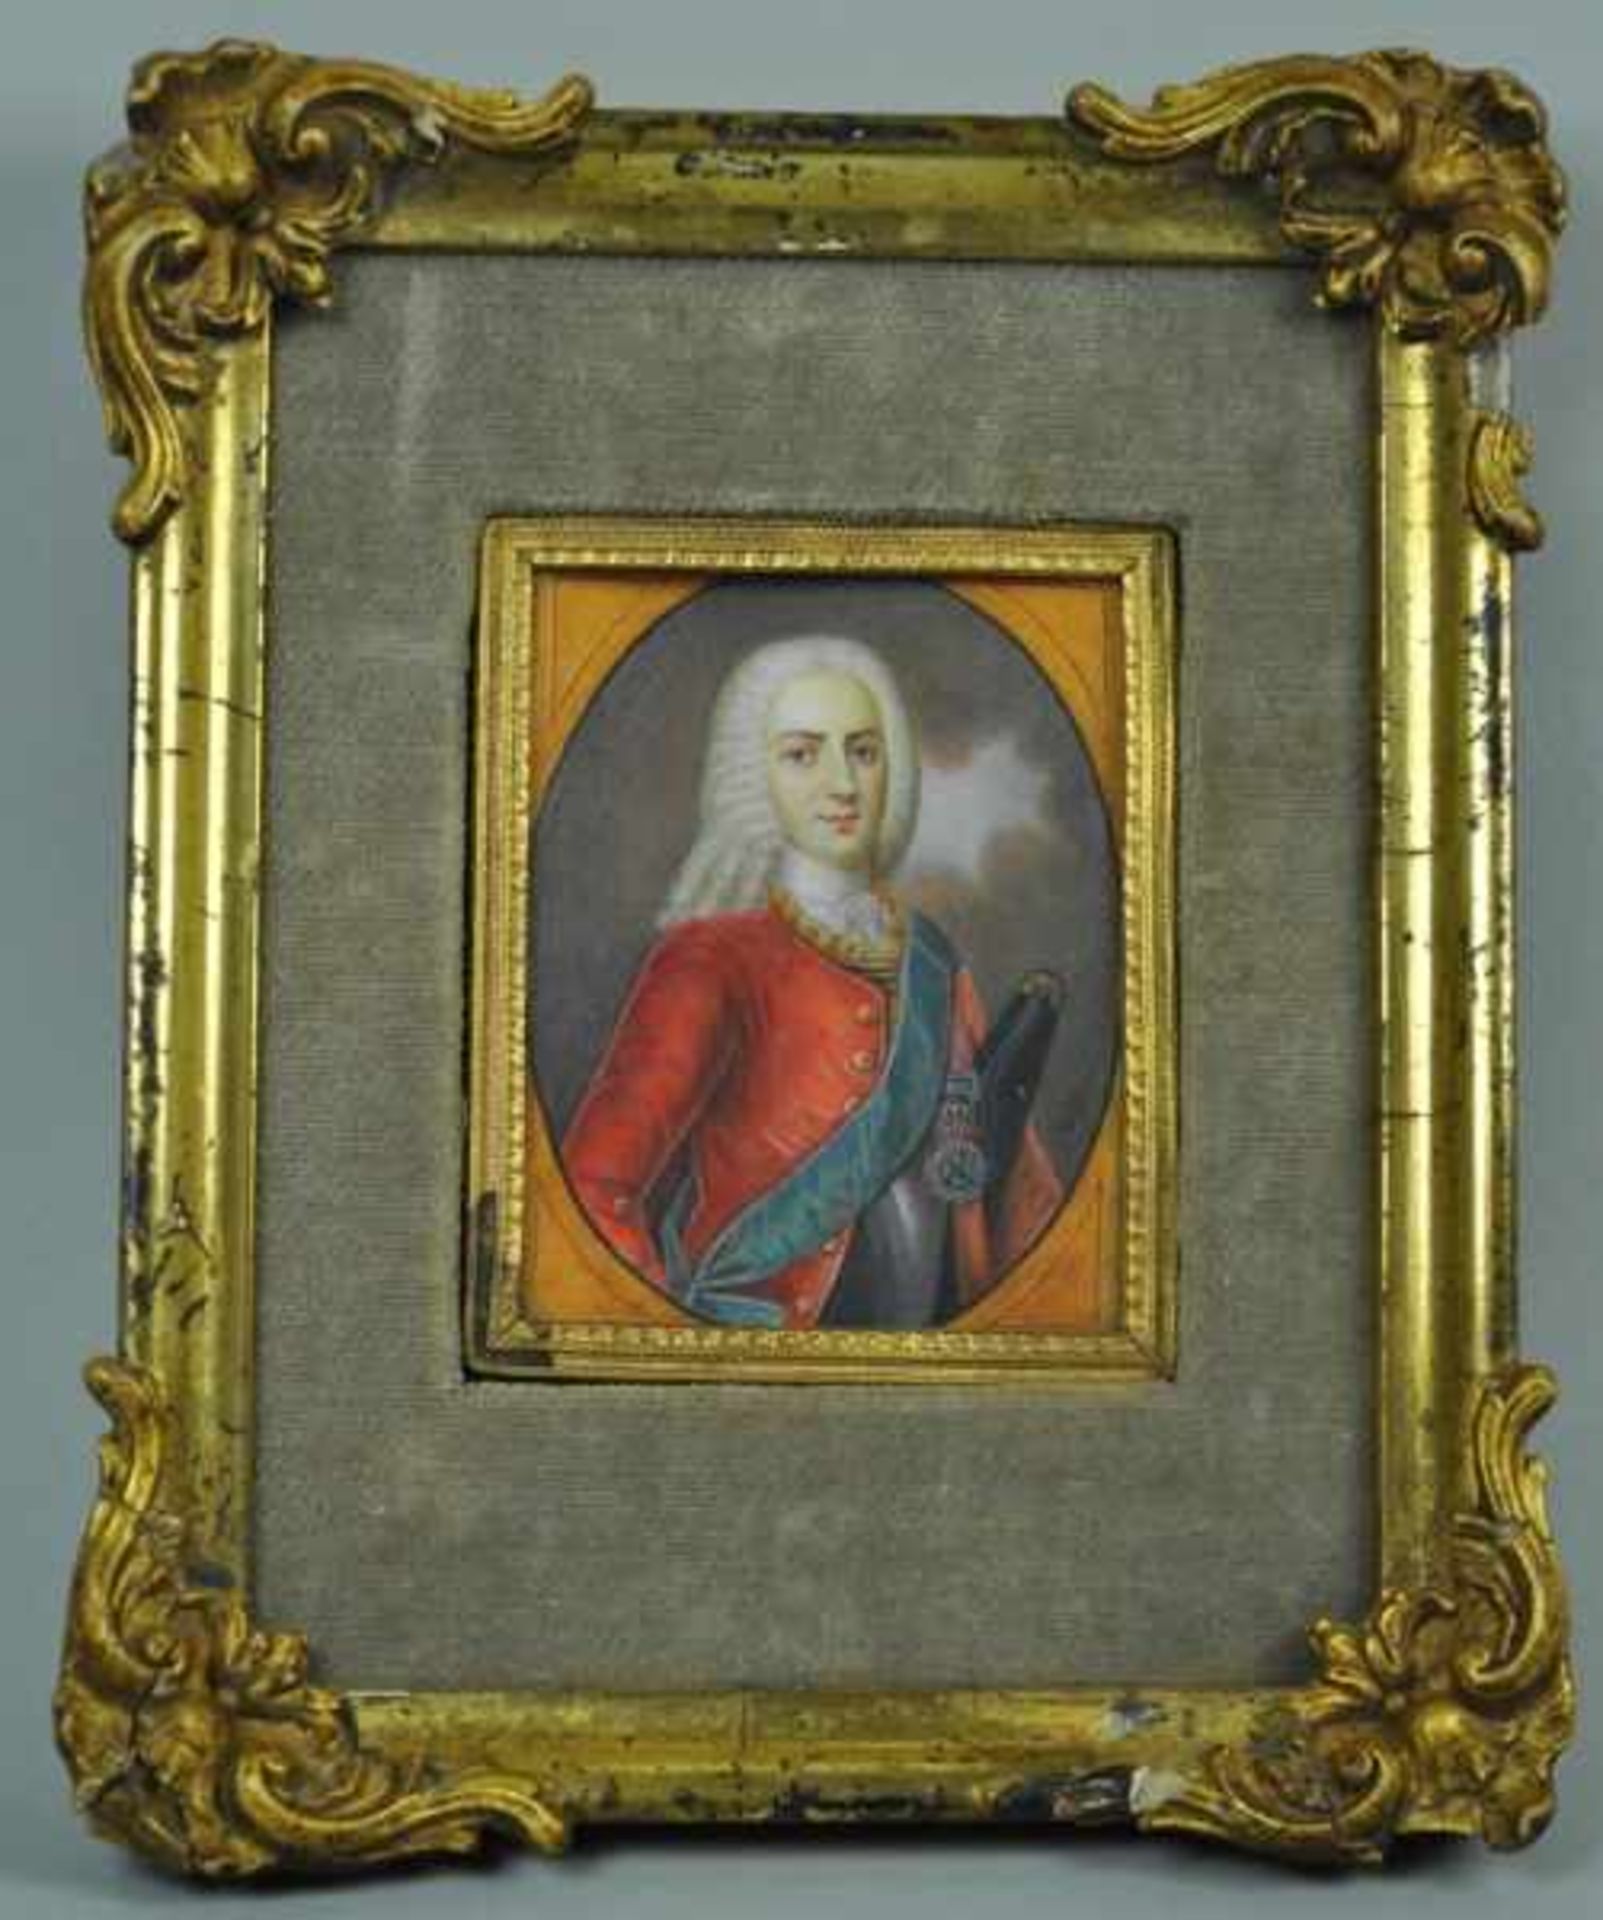 MINIATURMALEREI (18.Jh.) "Herzog von Bourbon", in Halbfigur, mit Schärpe u. Orden, Miniaturmalerei - Image 2 of 5